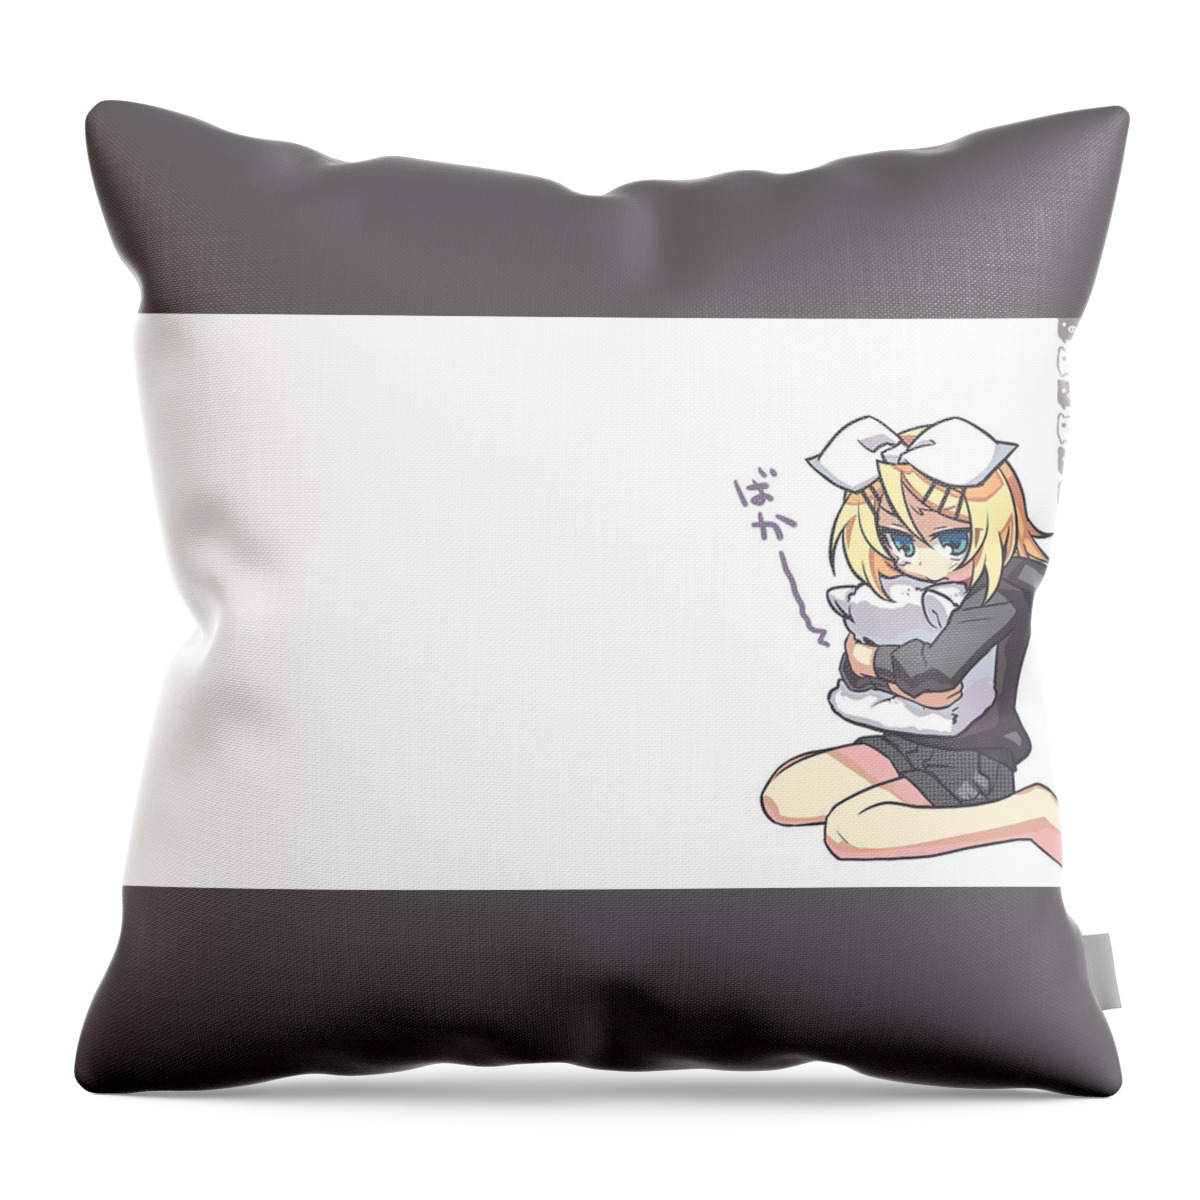 Vocaloid Throw Pillow featuring the digital art Vocaloid #142 by Super Lovely